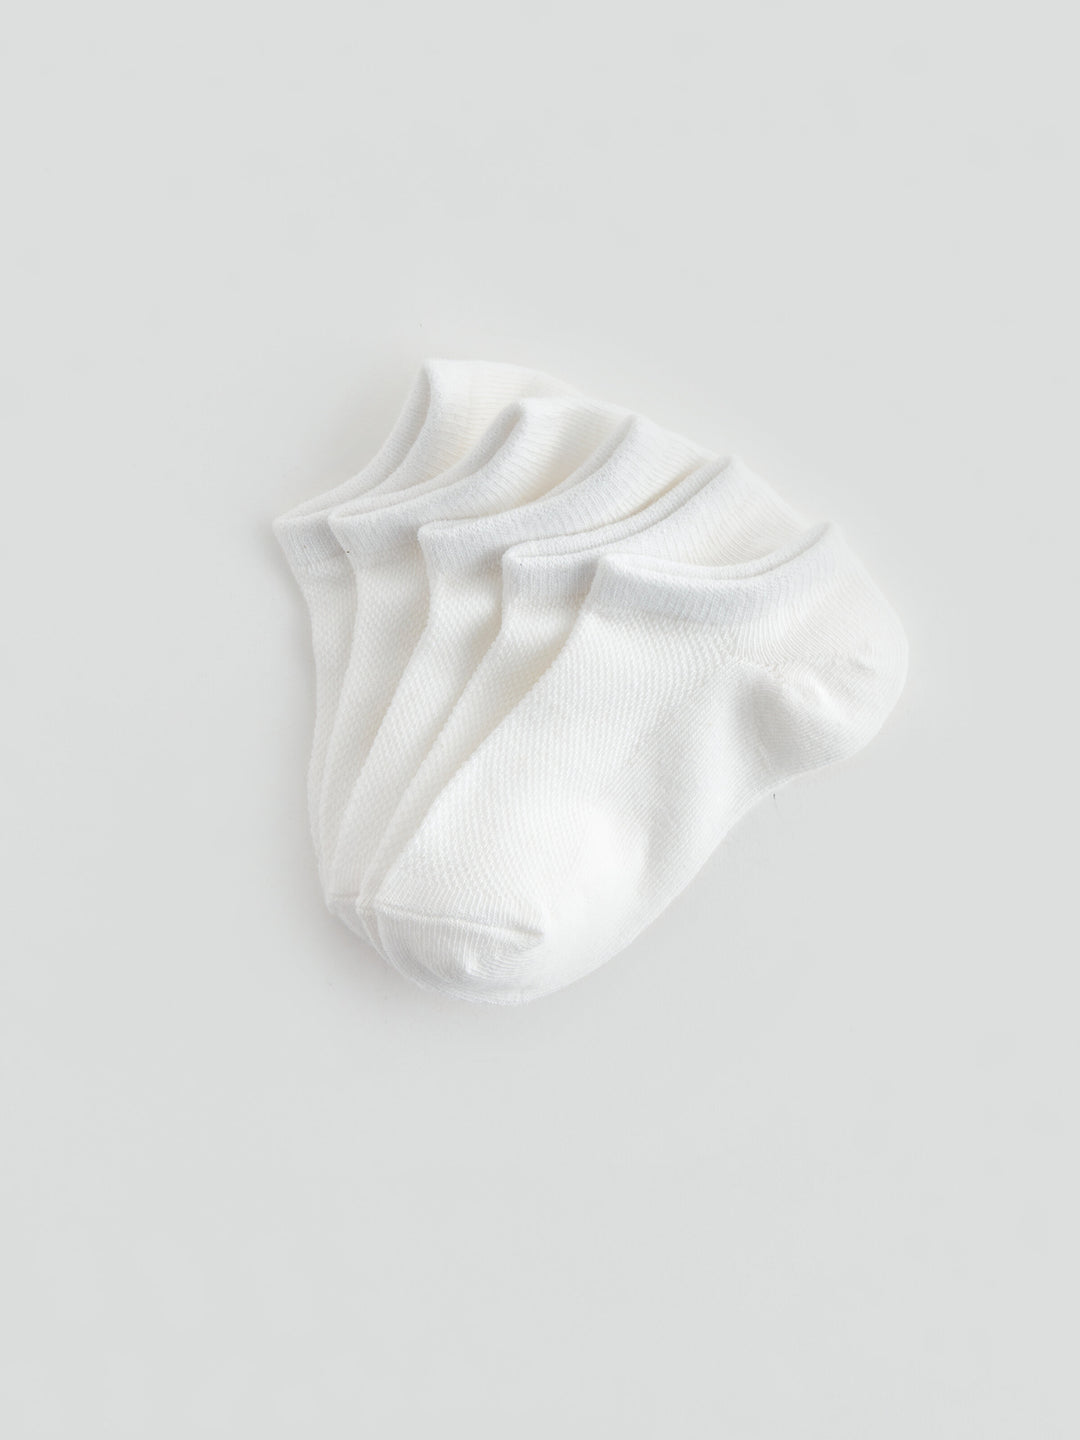 Basic Baby Boy Booties Socks 5 Pack